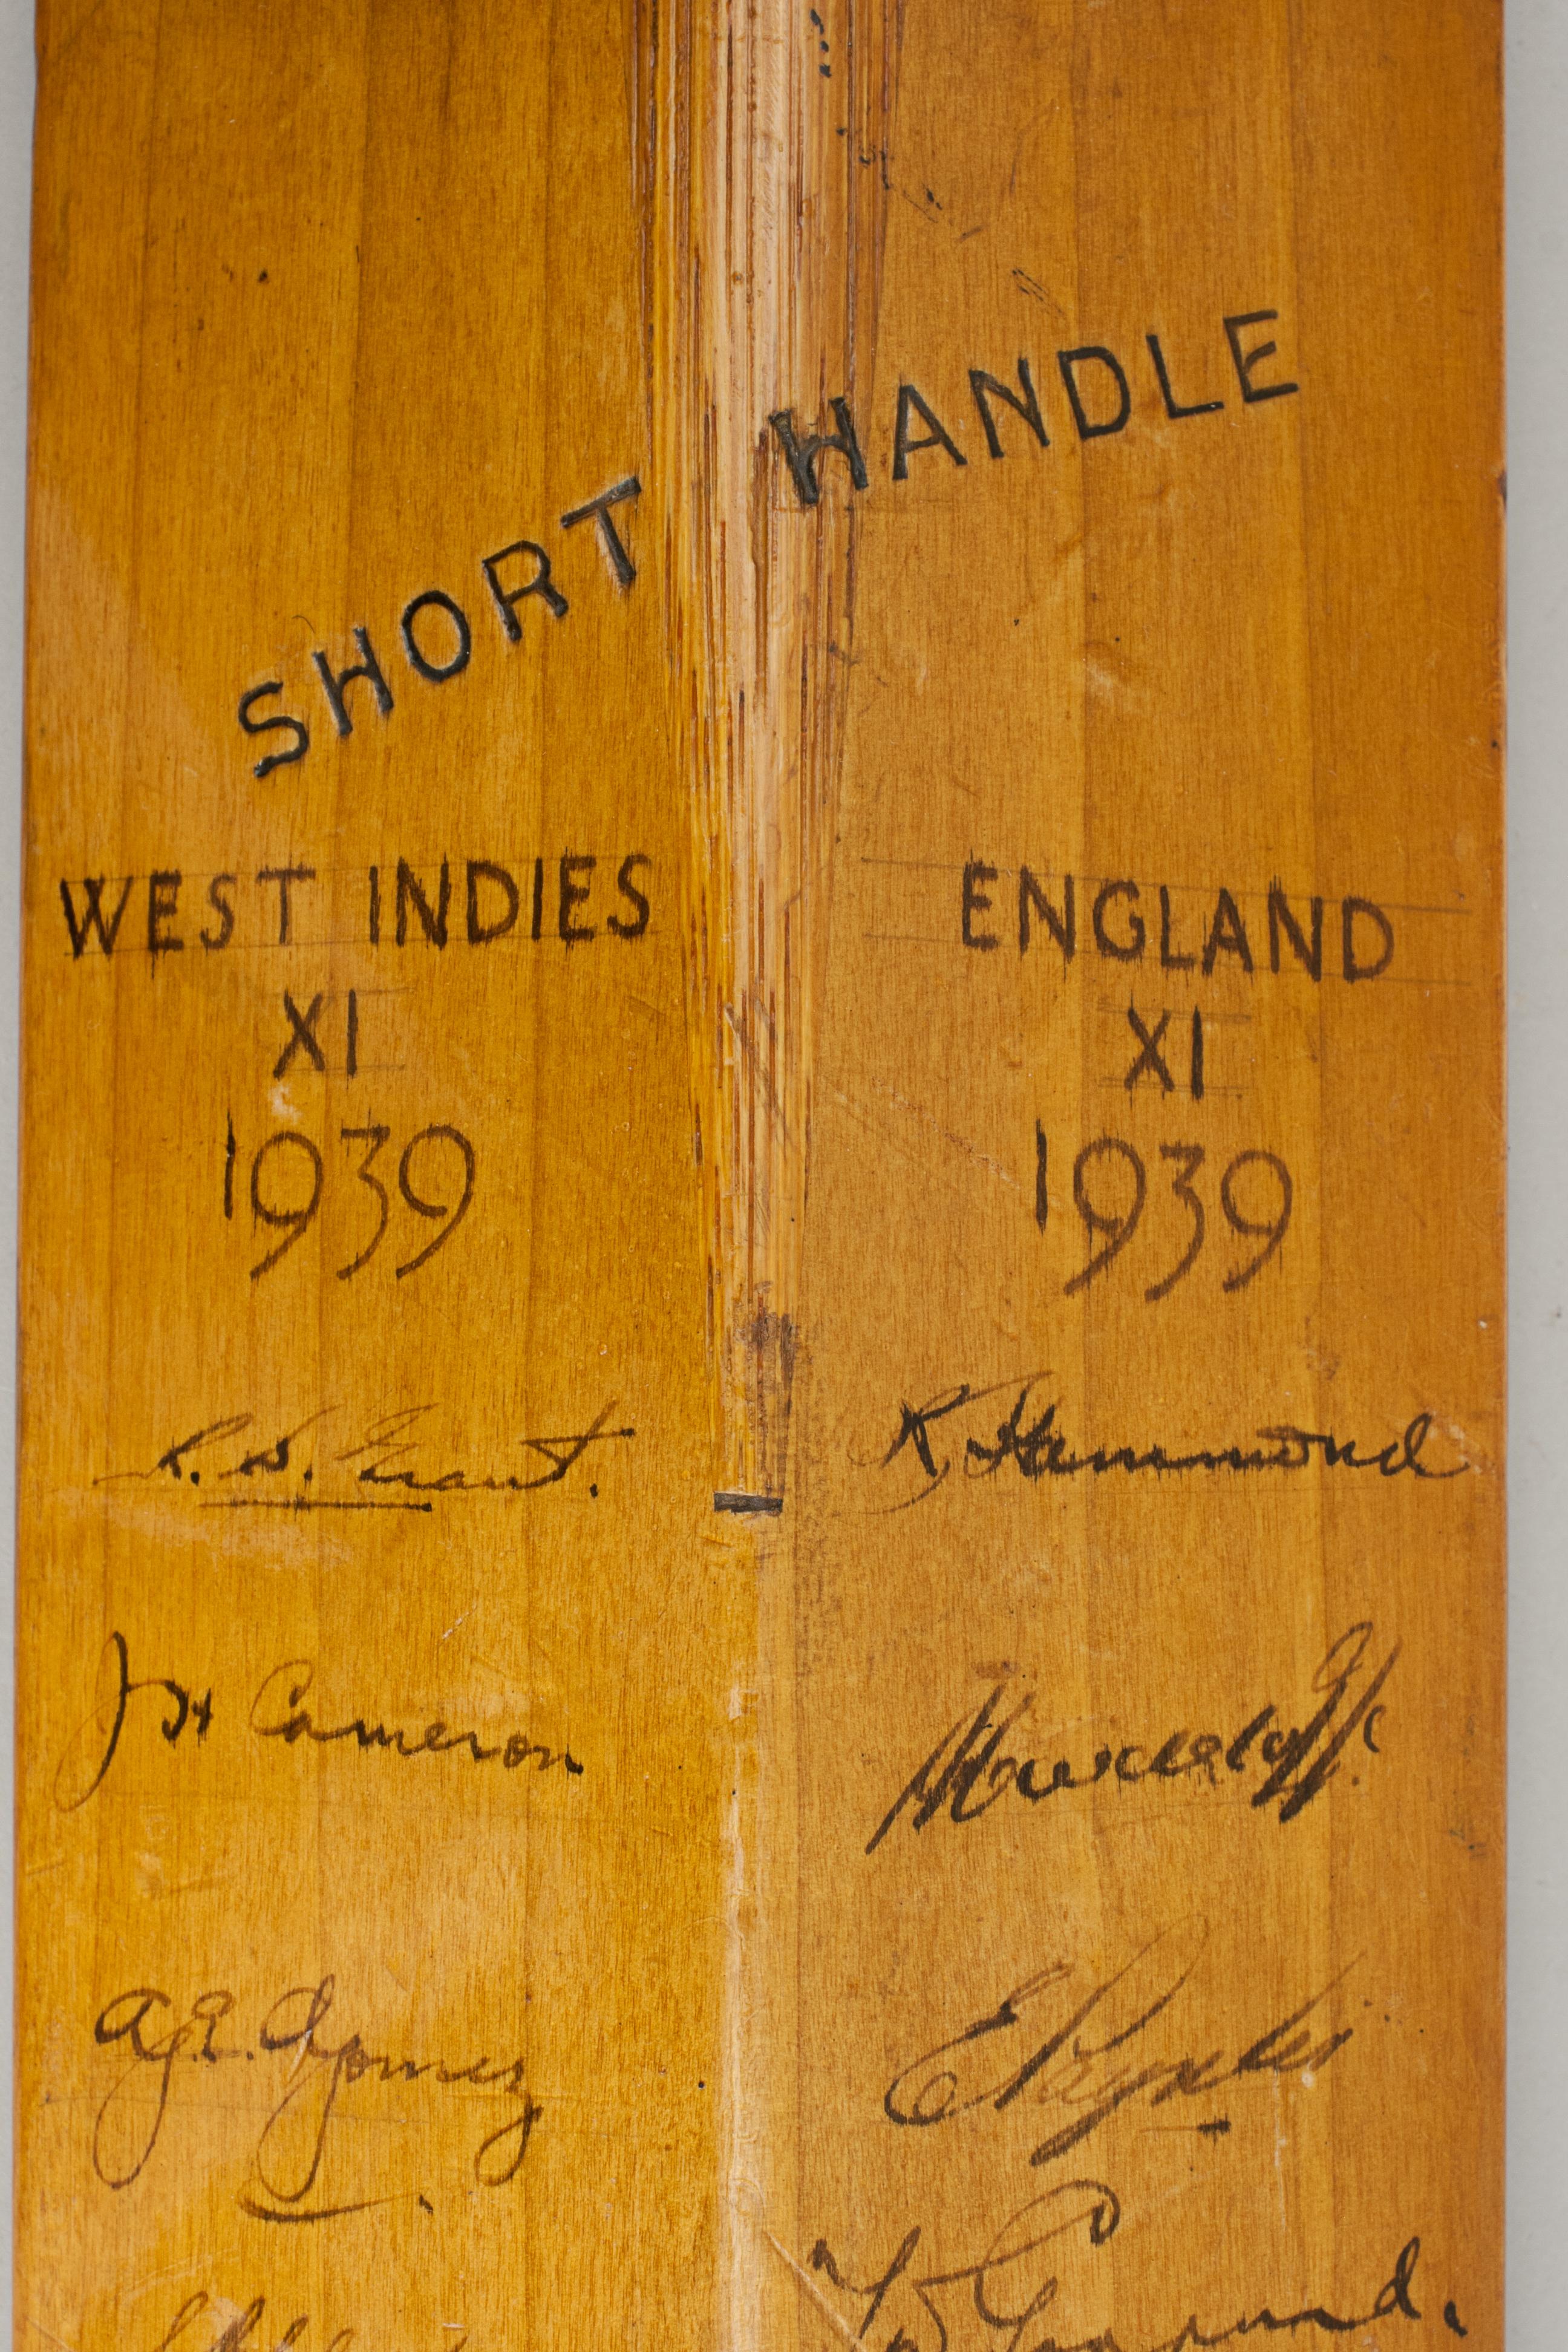 Mid-20th Century Vintage Cricket Bat Signed by 1939 West Indies v England Cricket Teams